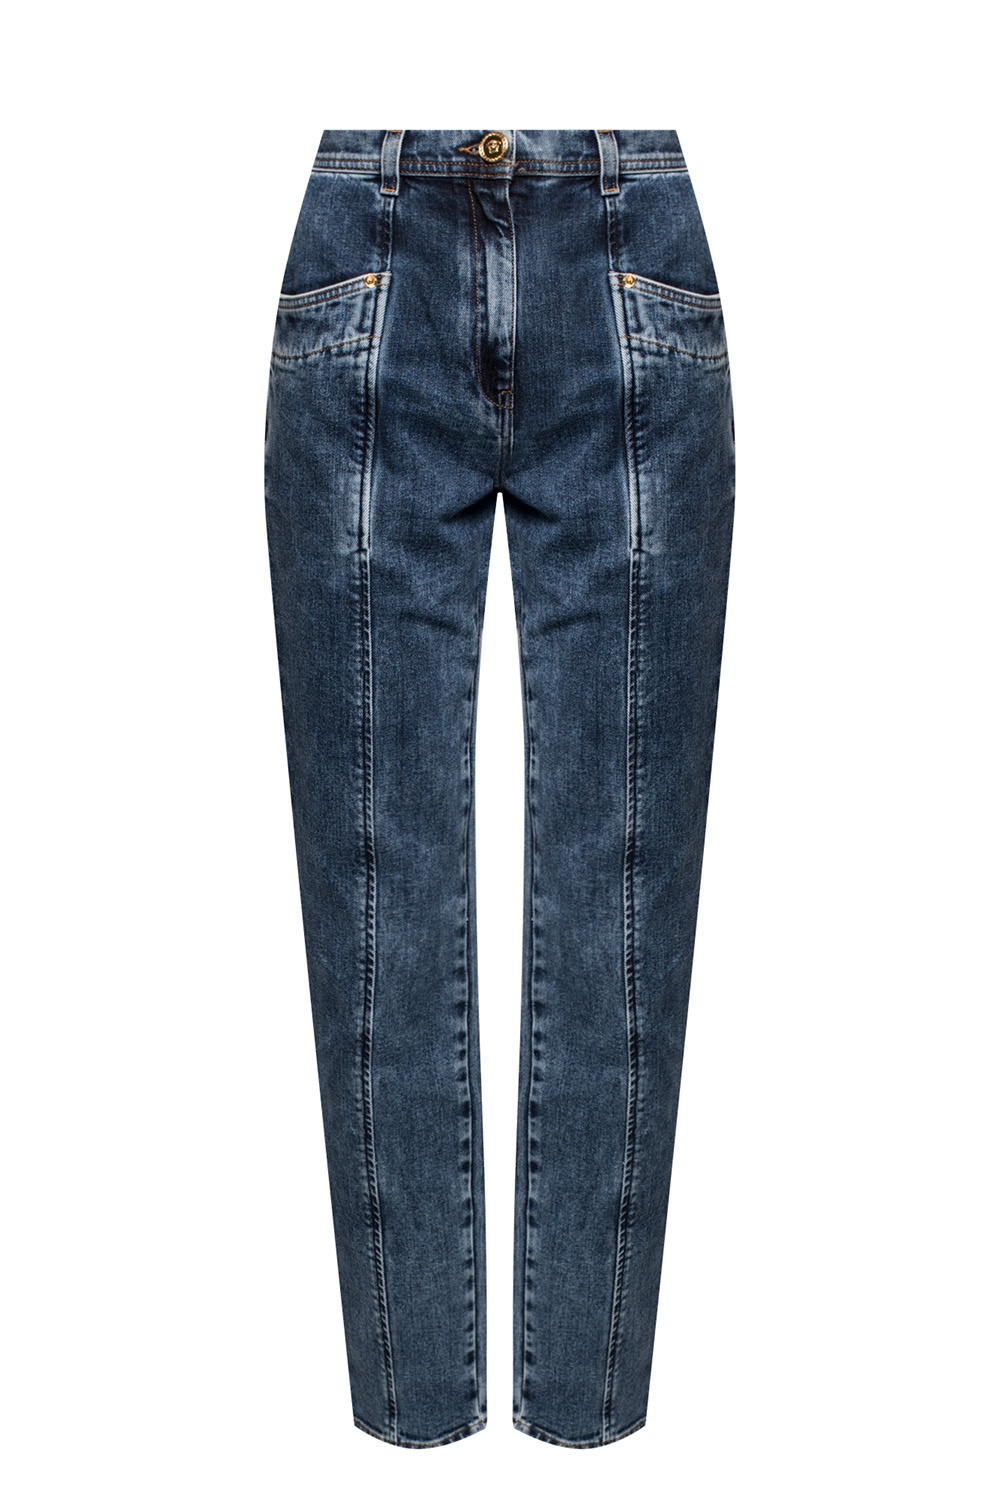 versace high waisted jeans